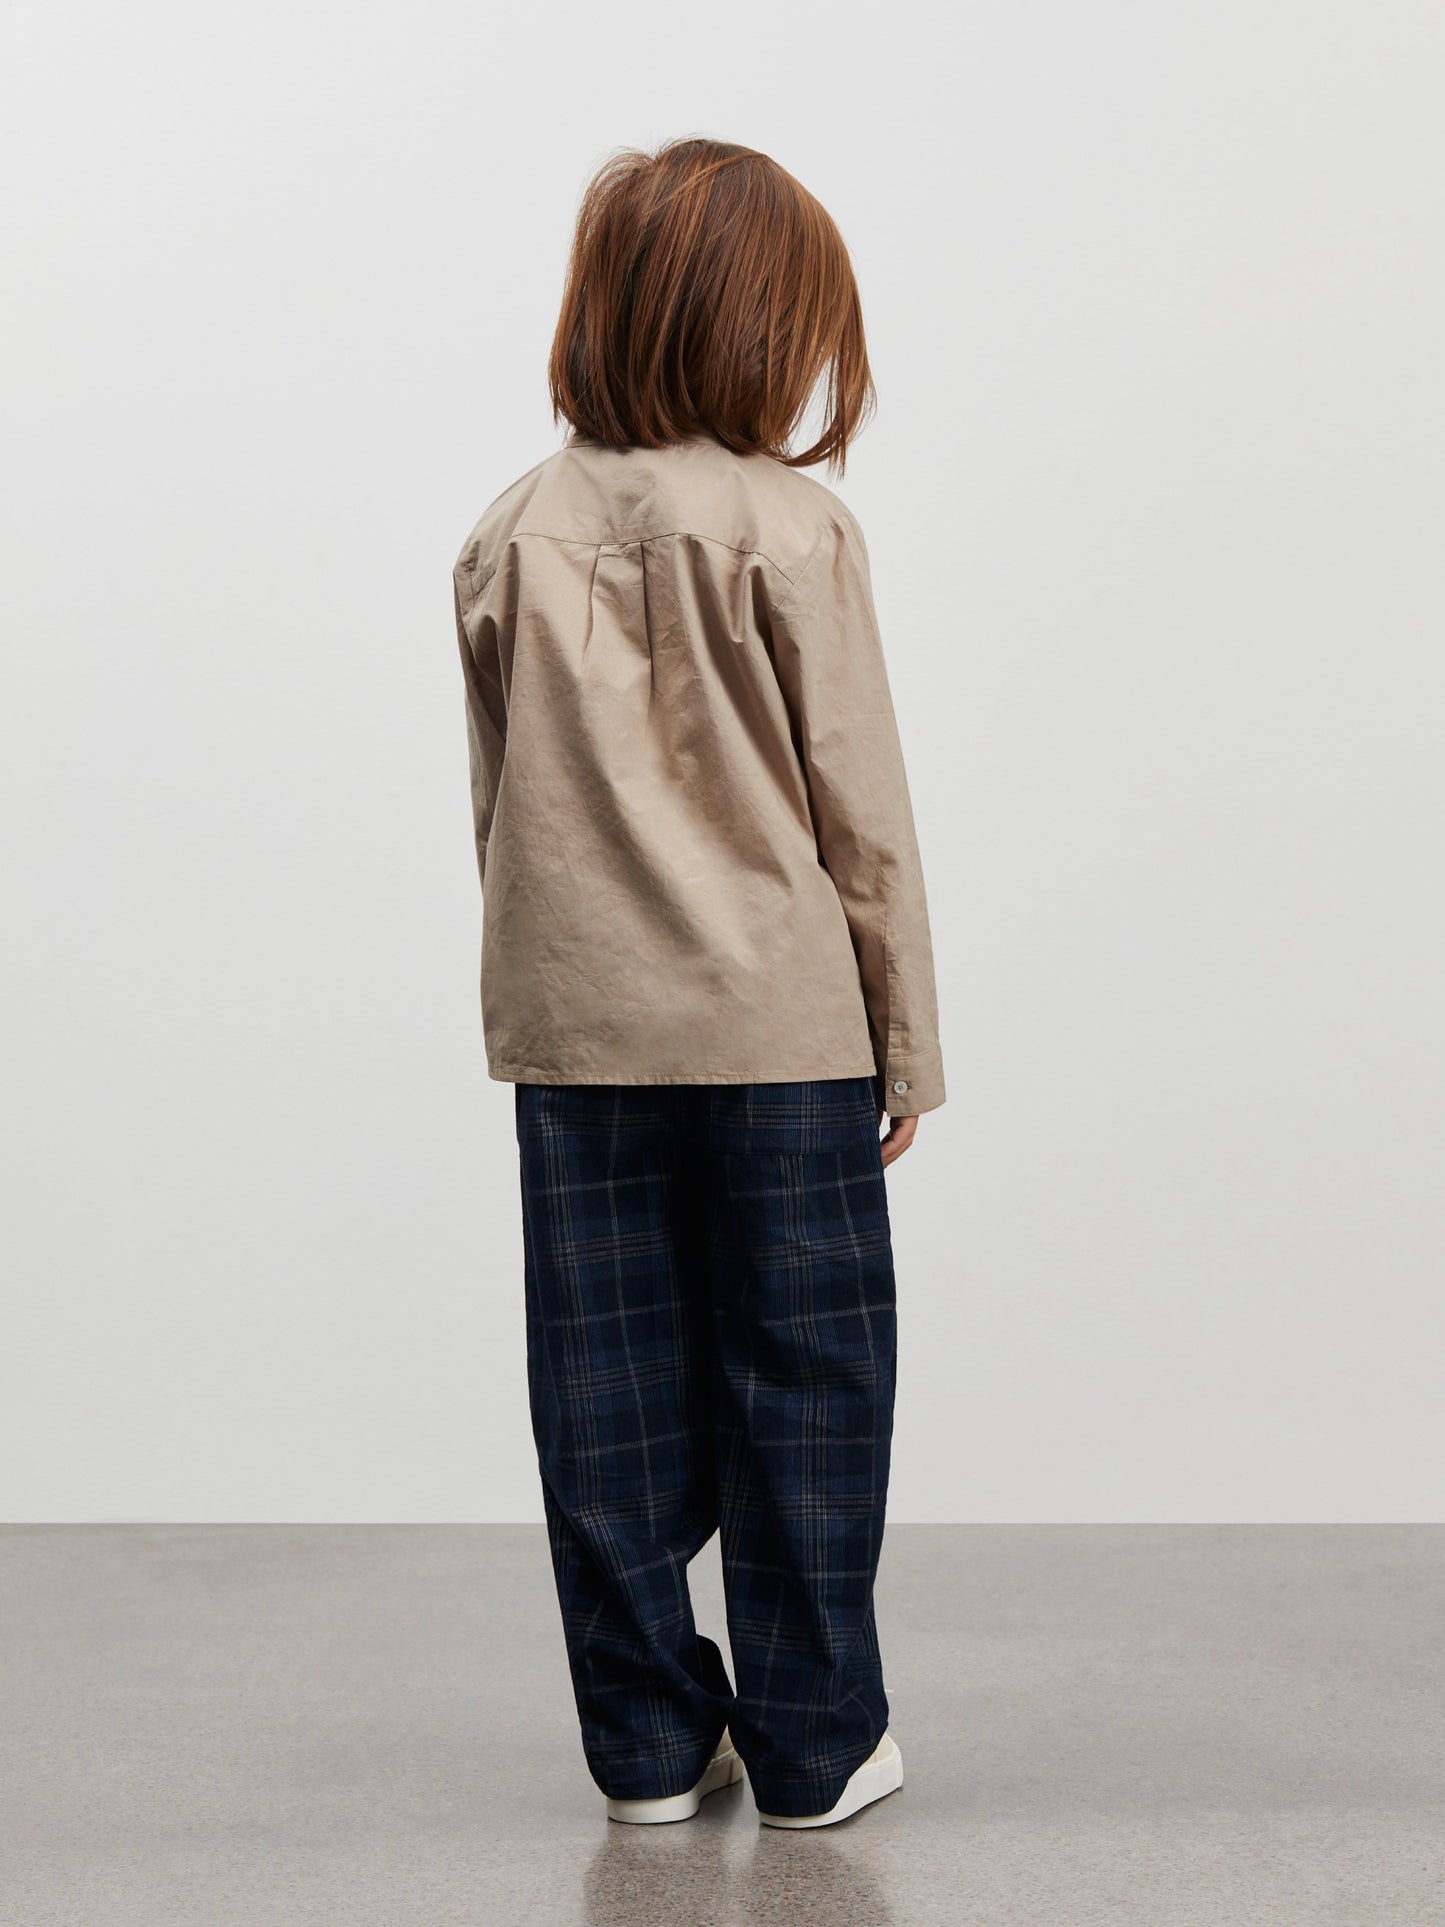 Skall Musling - Lucca shirt - Roasted brown